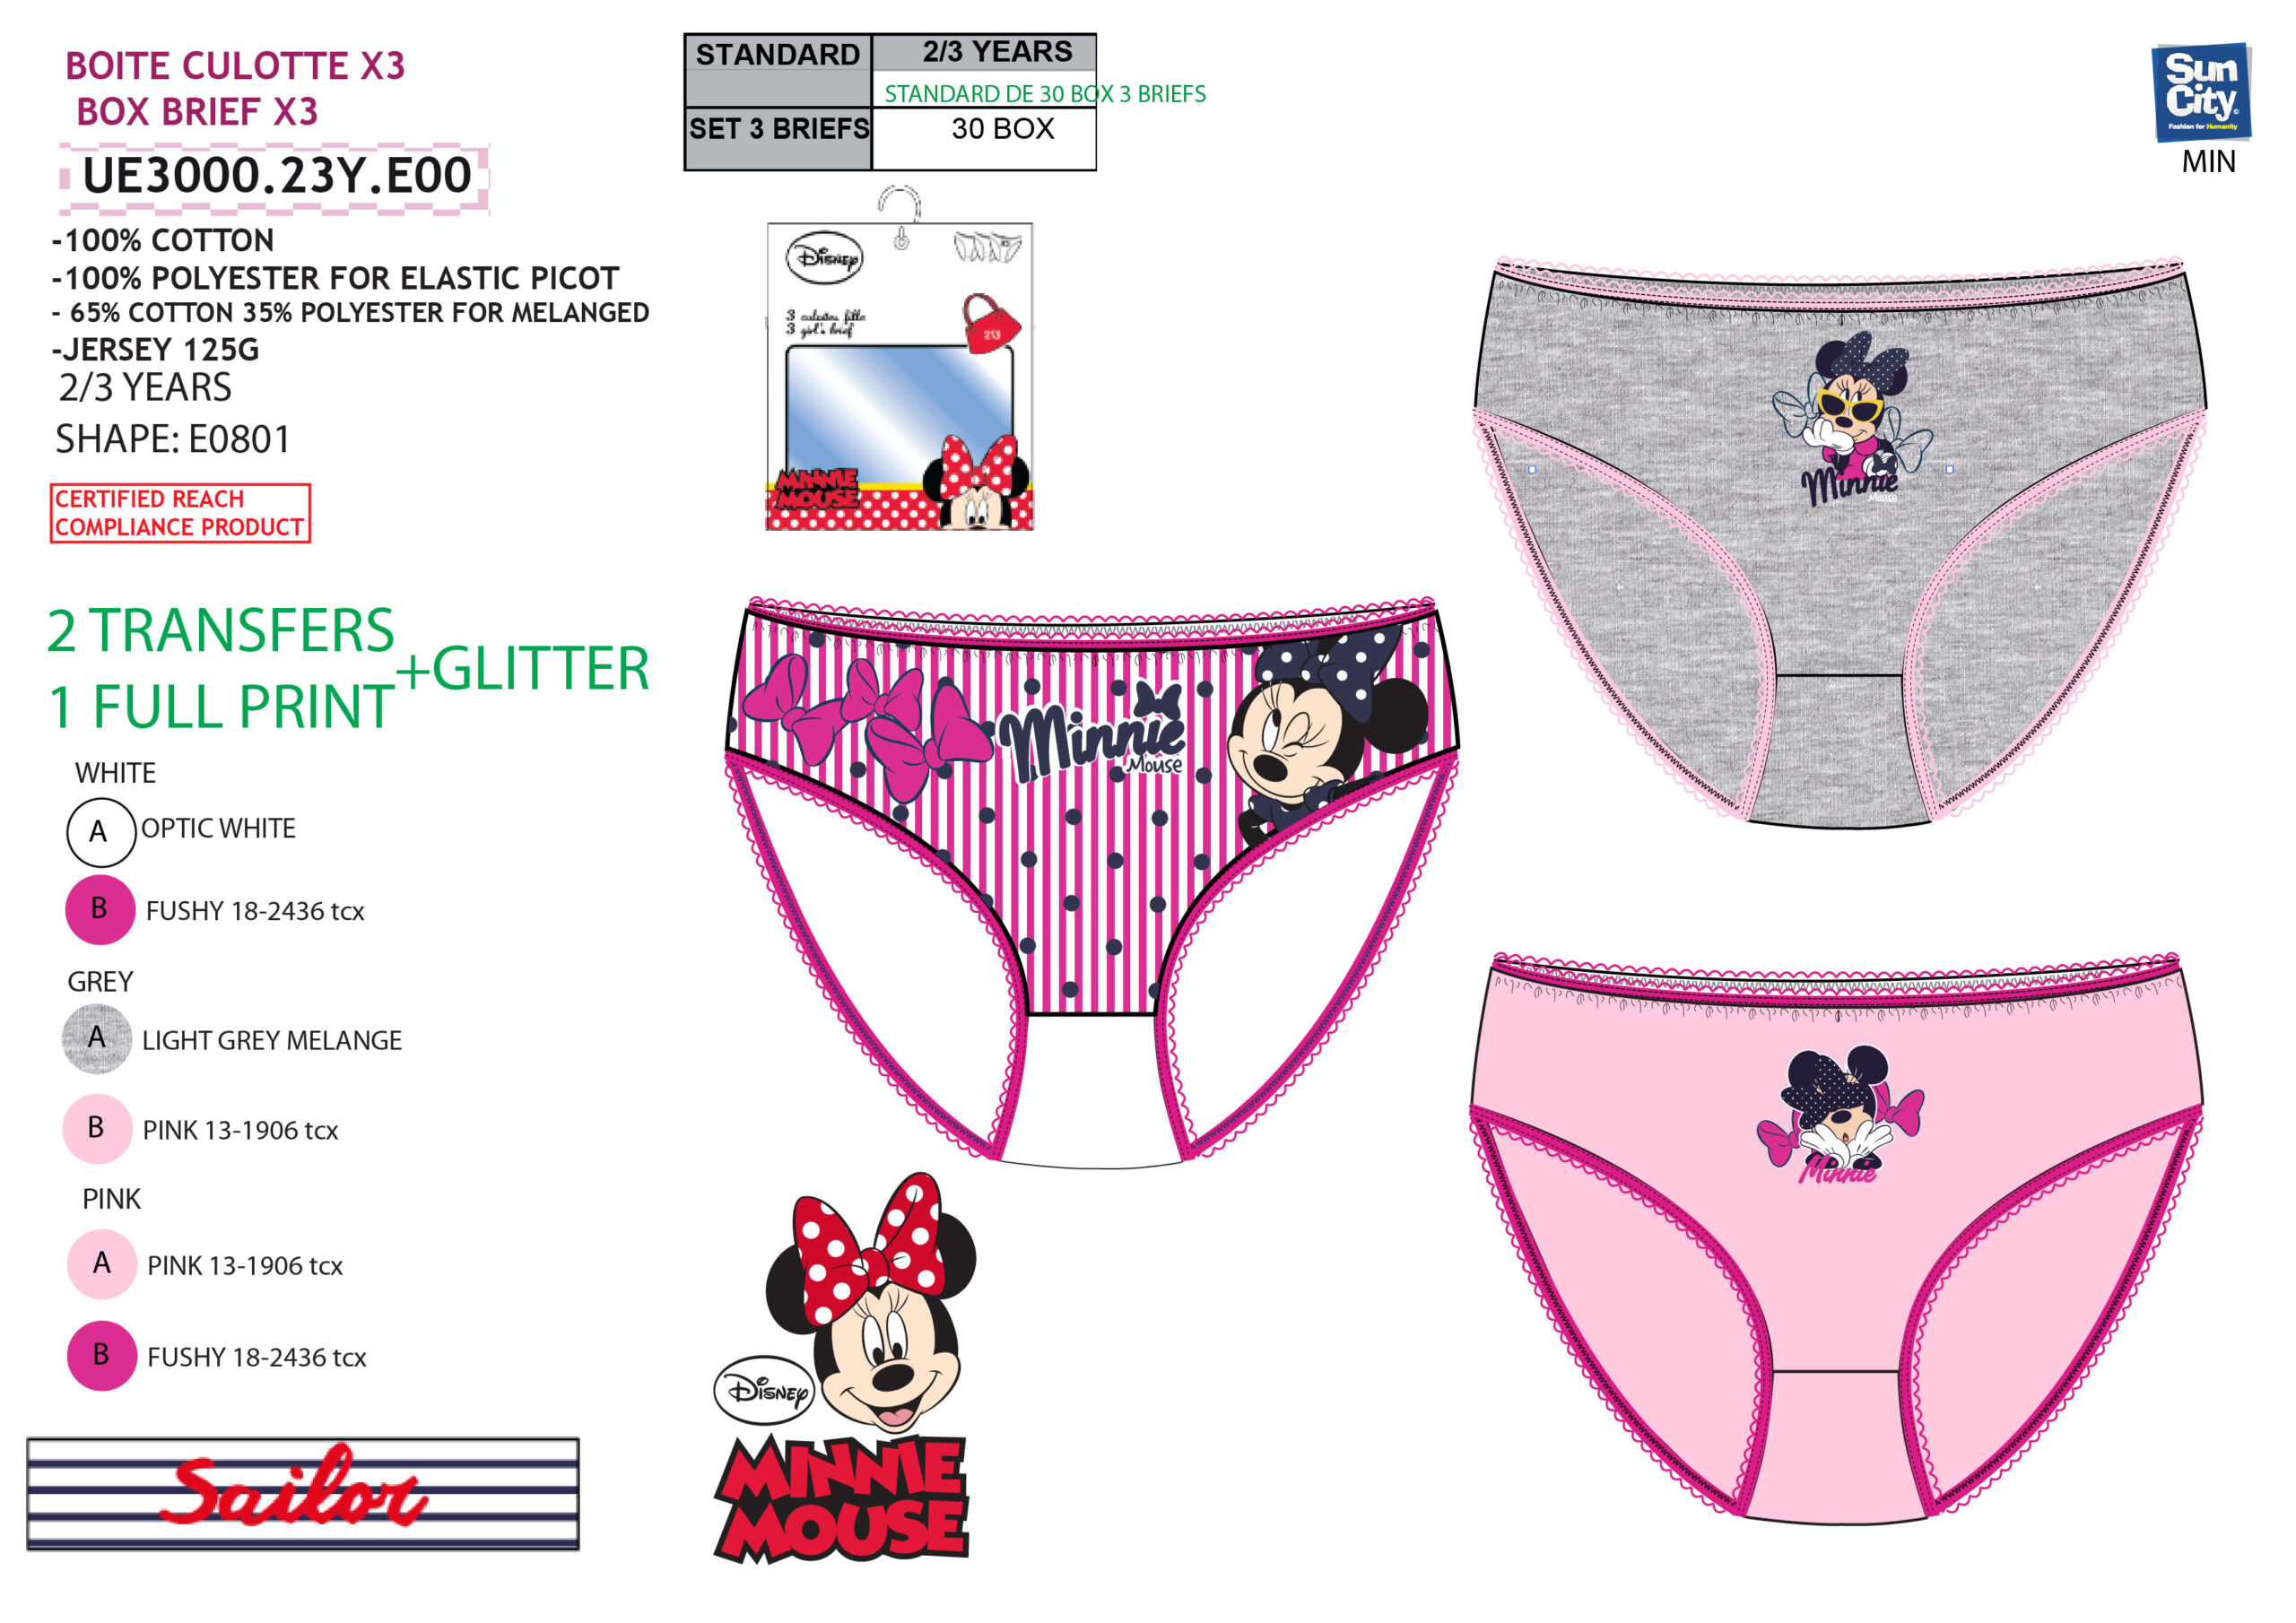 Disney Minnie Mouse Underwear 100% Cotton Panties, 3 Pack (Toddler Girls)